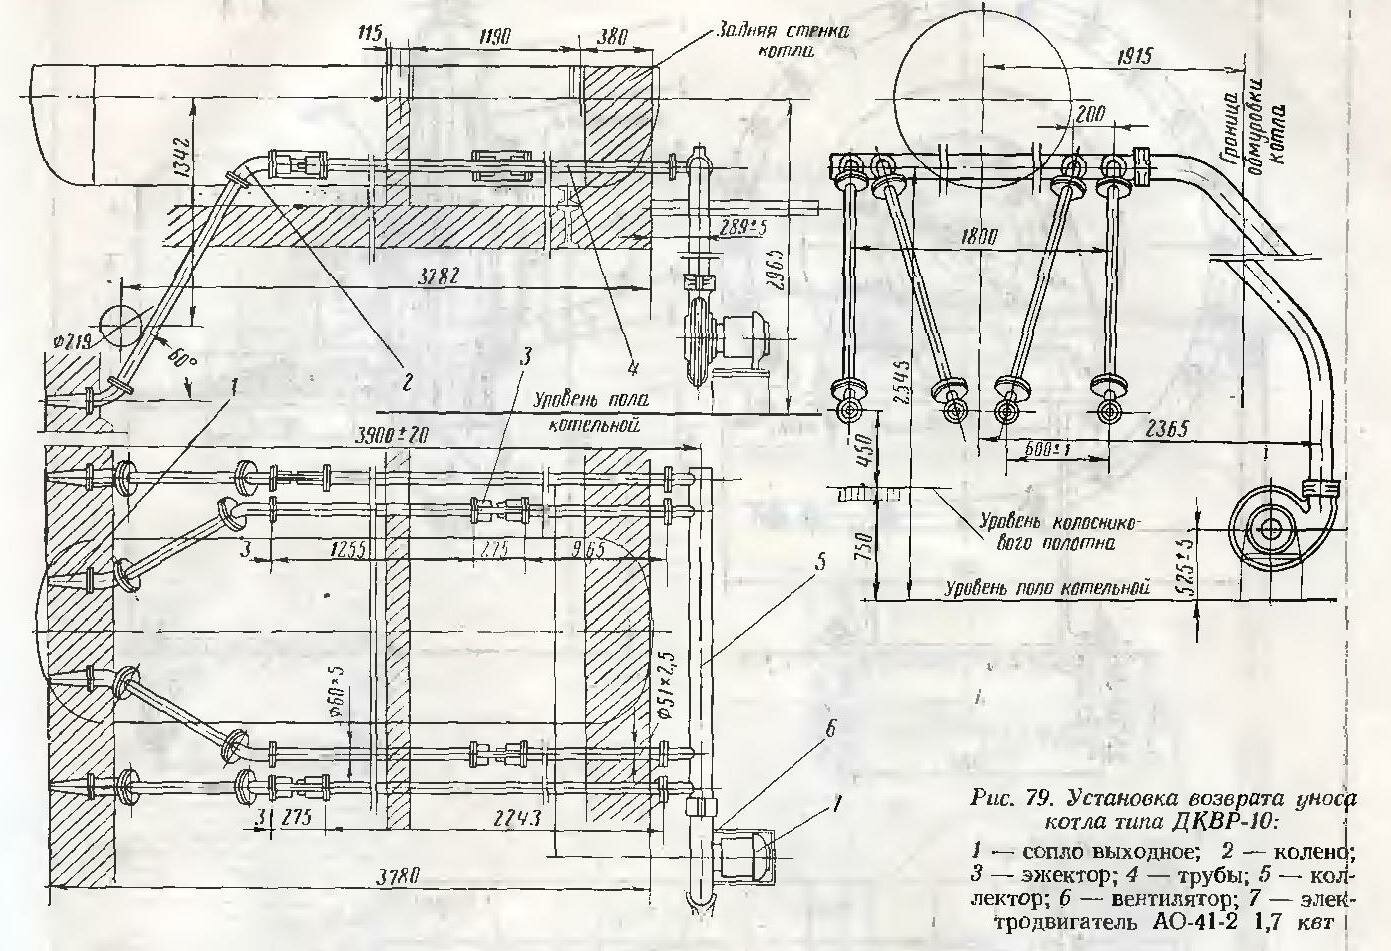 Схема установки возврата уноса котла типа ДКВР-10